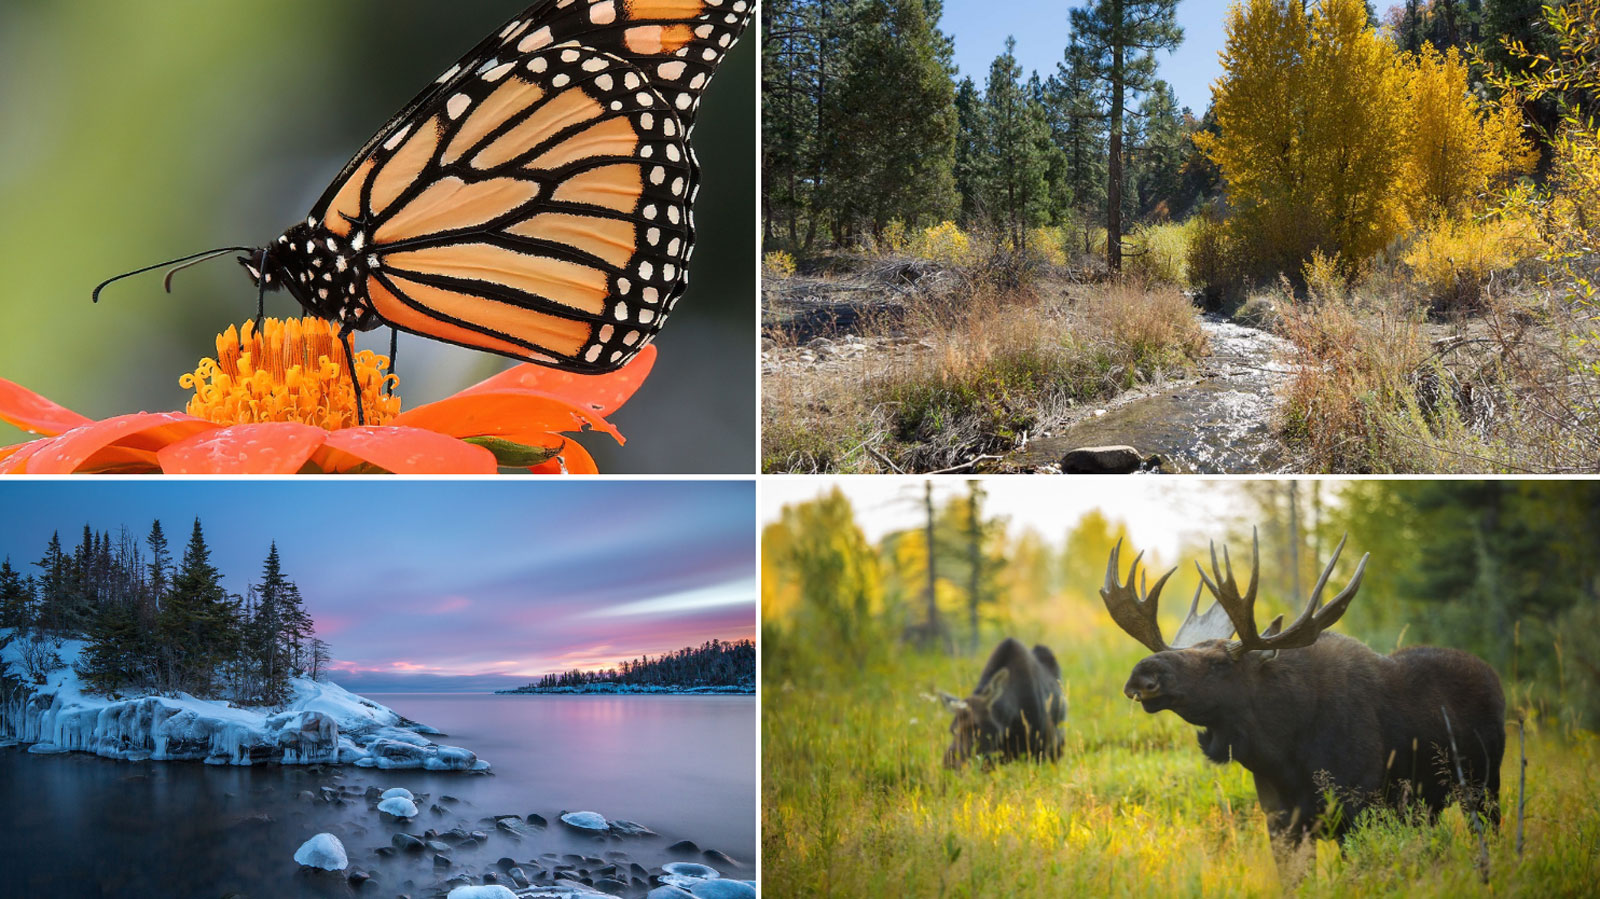 Credit: Photos (Clockwise) CC0, U.S. Forest Service via Flickr CC0, Traunfoto via Shutterstock, Chase Dekker via Shutterstock